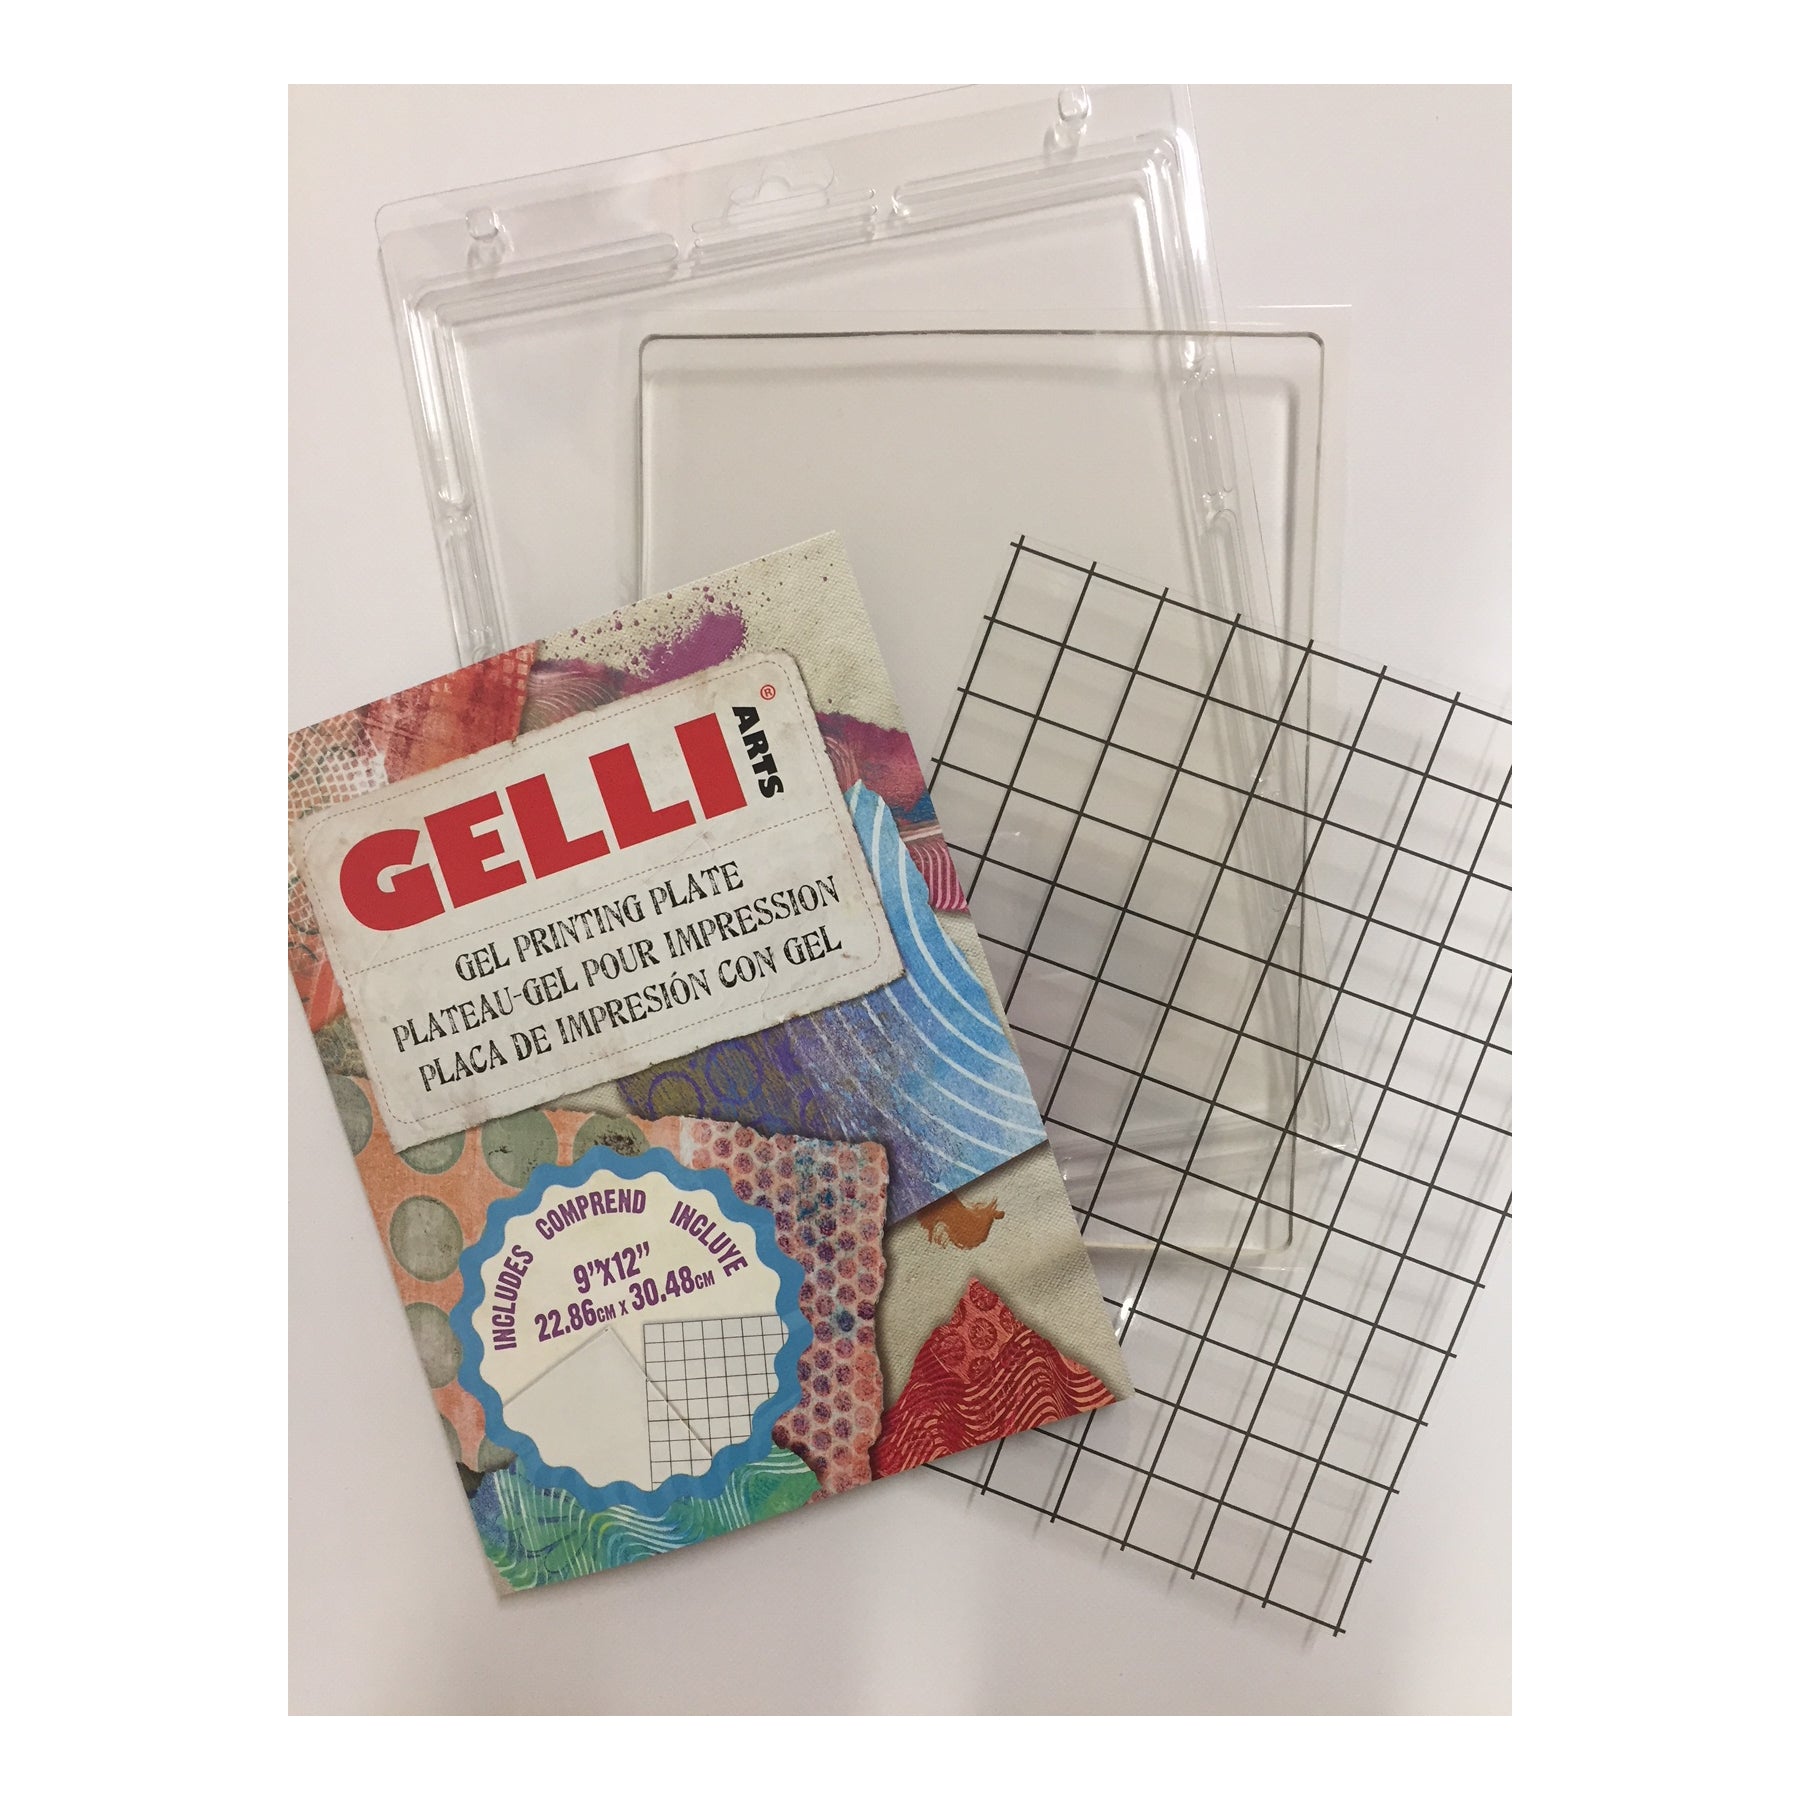 Gelli Arts® Gel Printing Plates